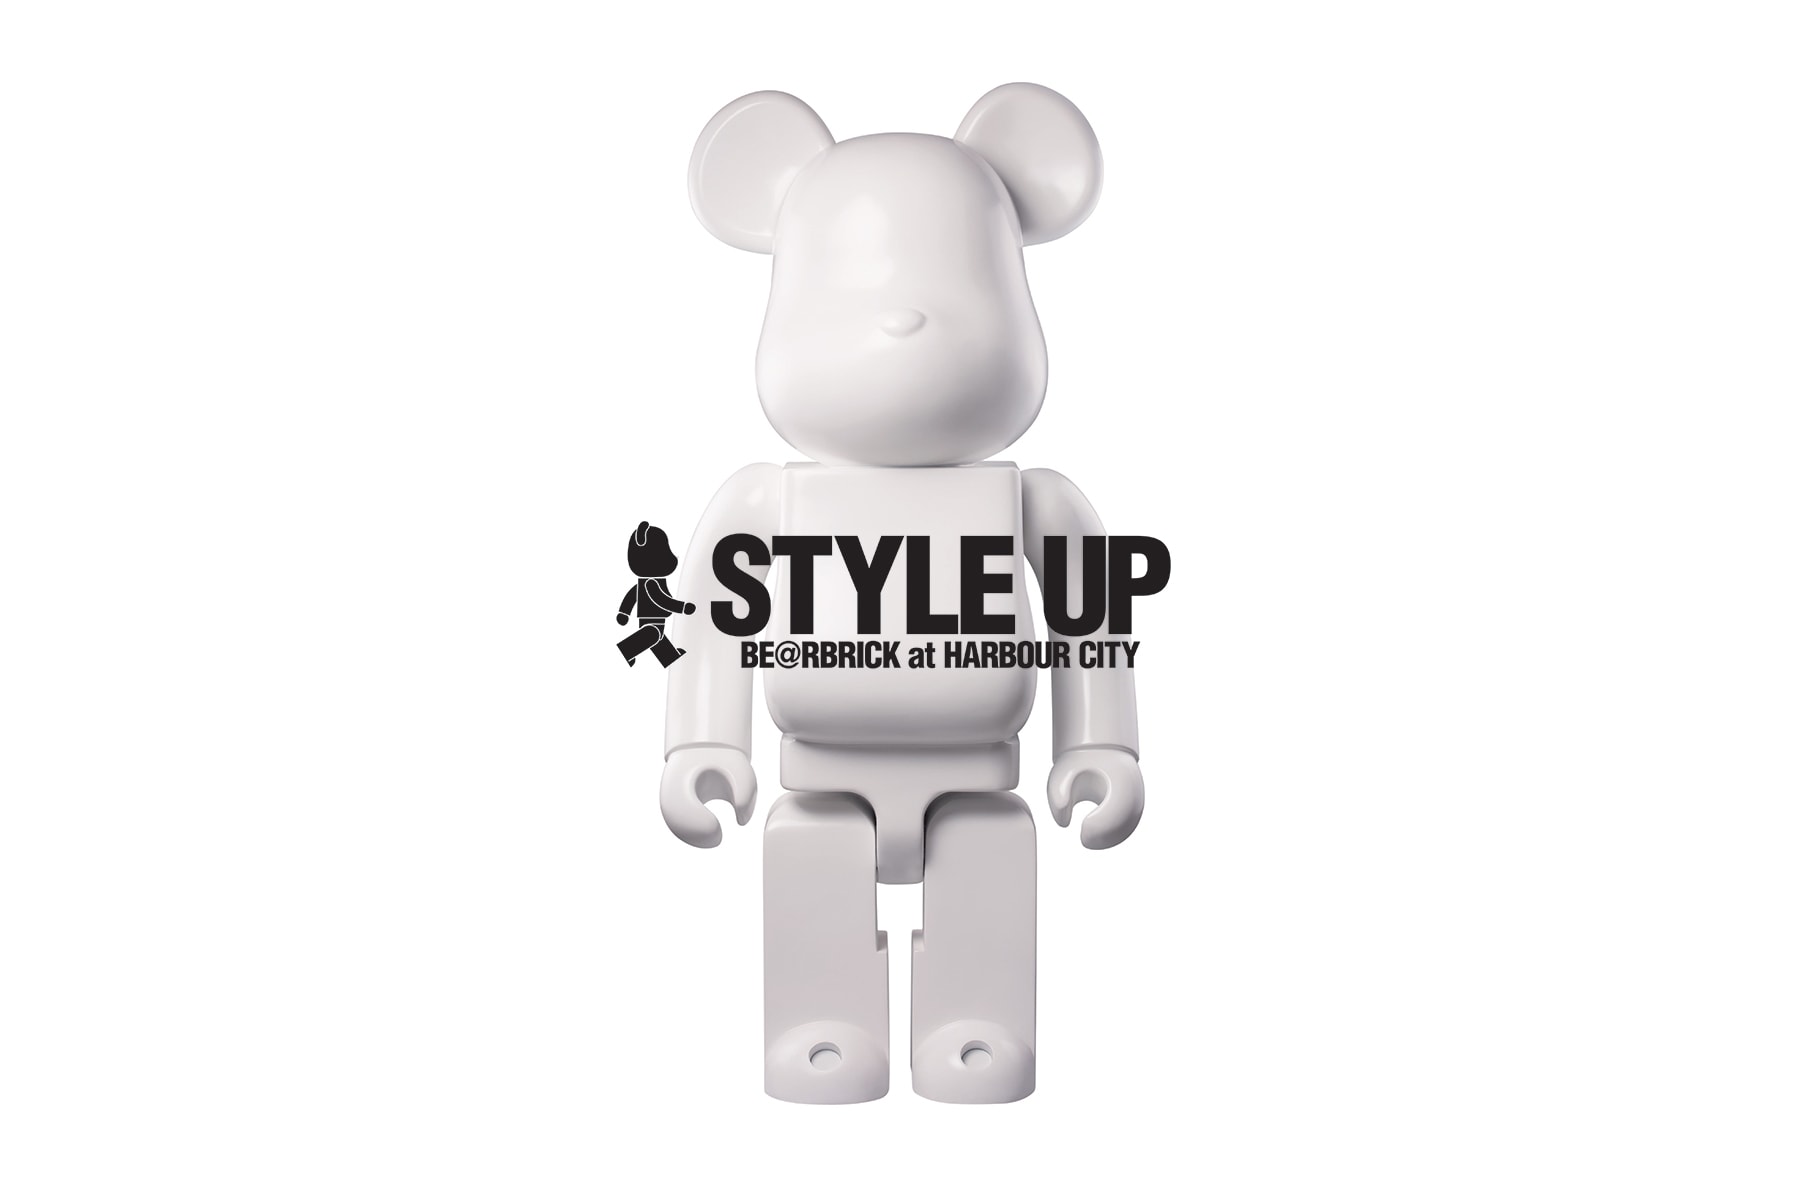 Bearbrick "Style Up" Group Exhibition white bear